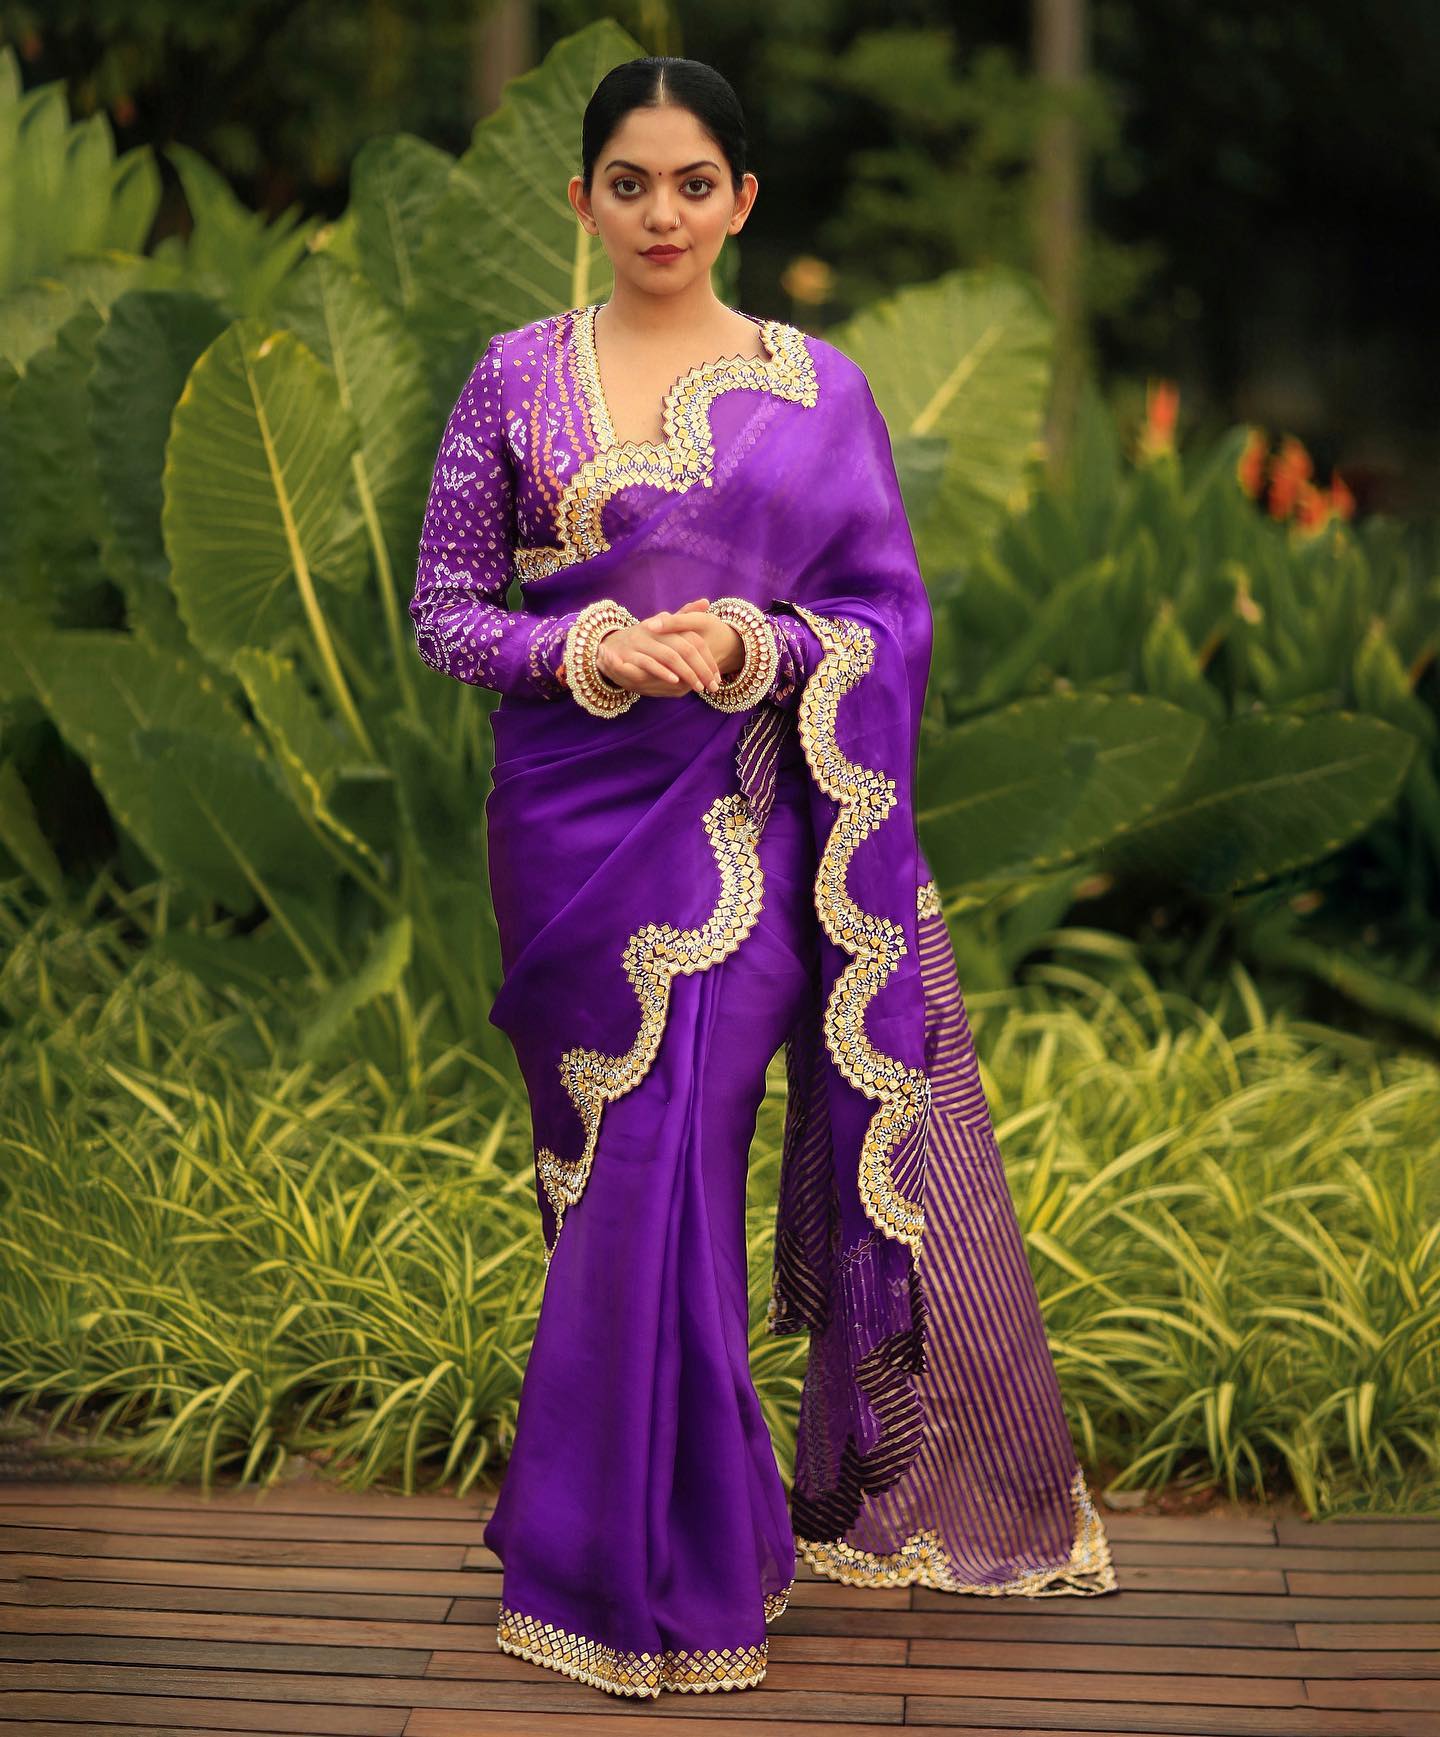 ahaana-krishna-latest-photoshoot-for-vanitha-magazine-004